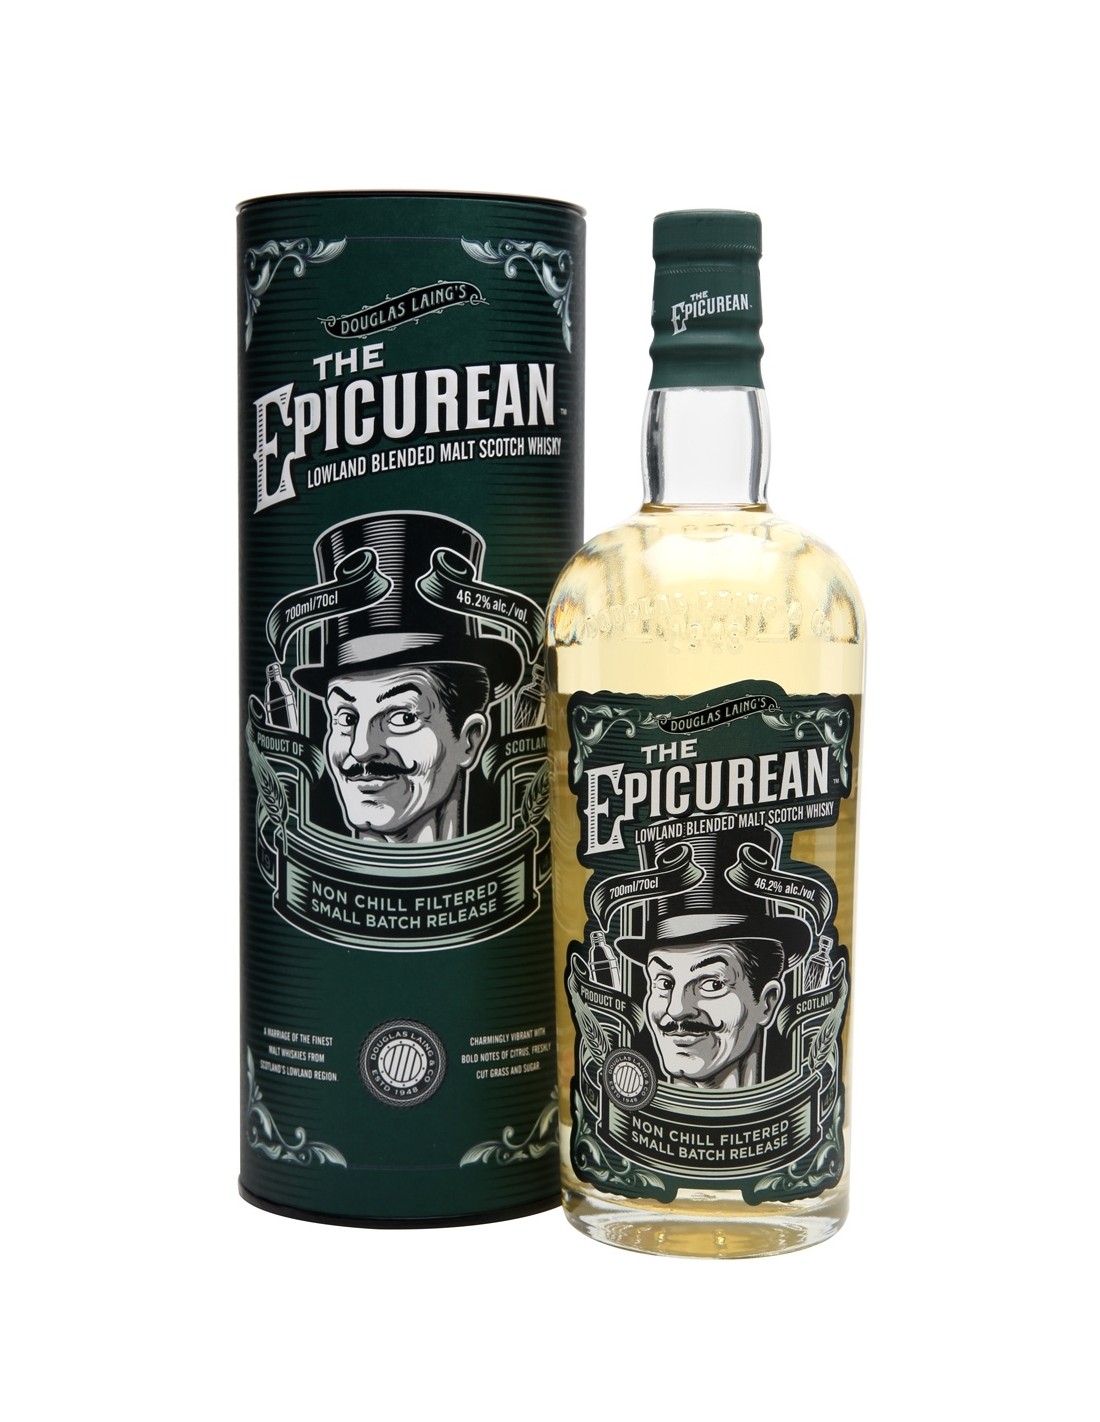 Whisky The Epicurean 0.7L, 46.2% alc., Scotia alcooldiscount.ro